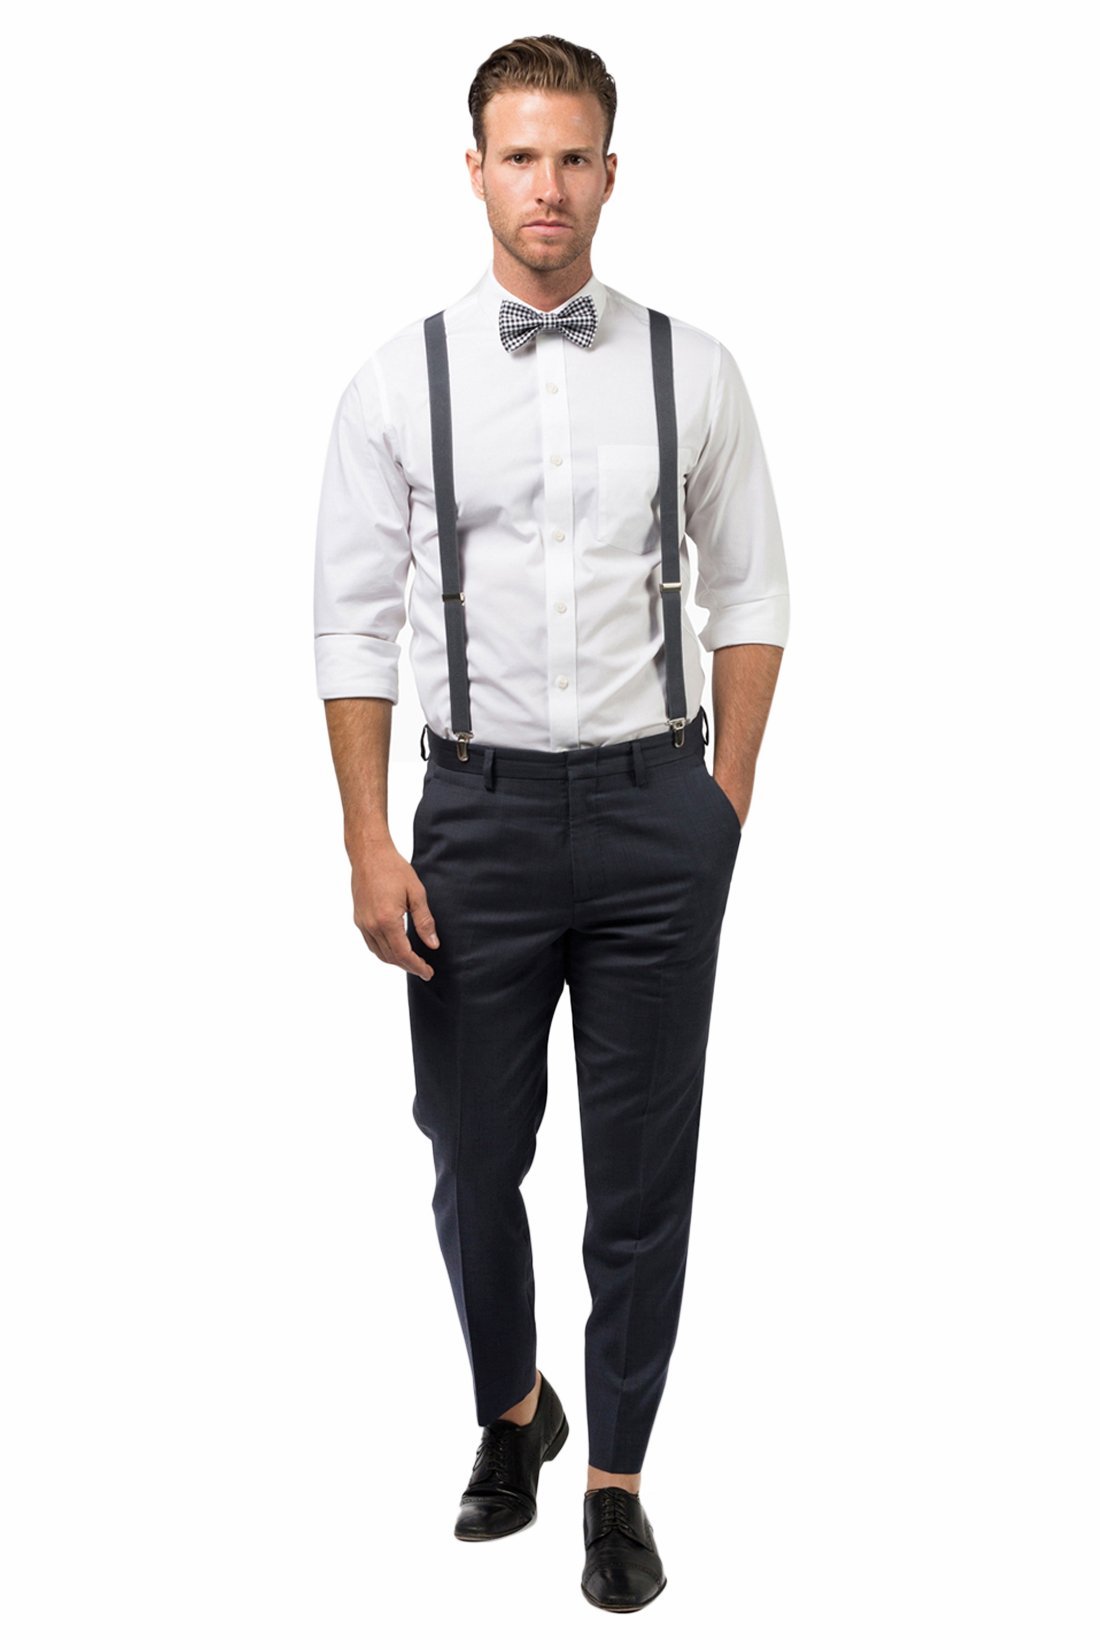 Charcoal Suspenders & Gingham Black Bow Tie